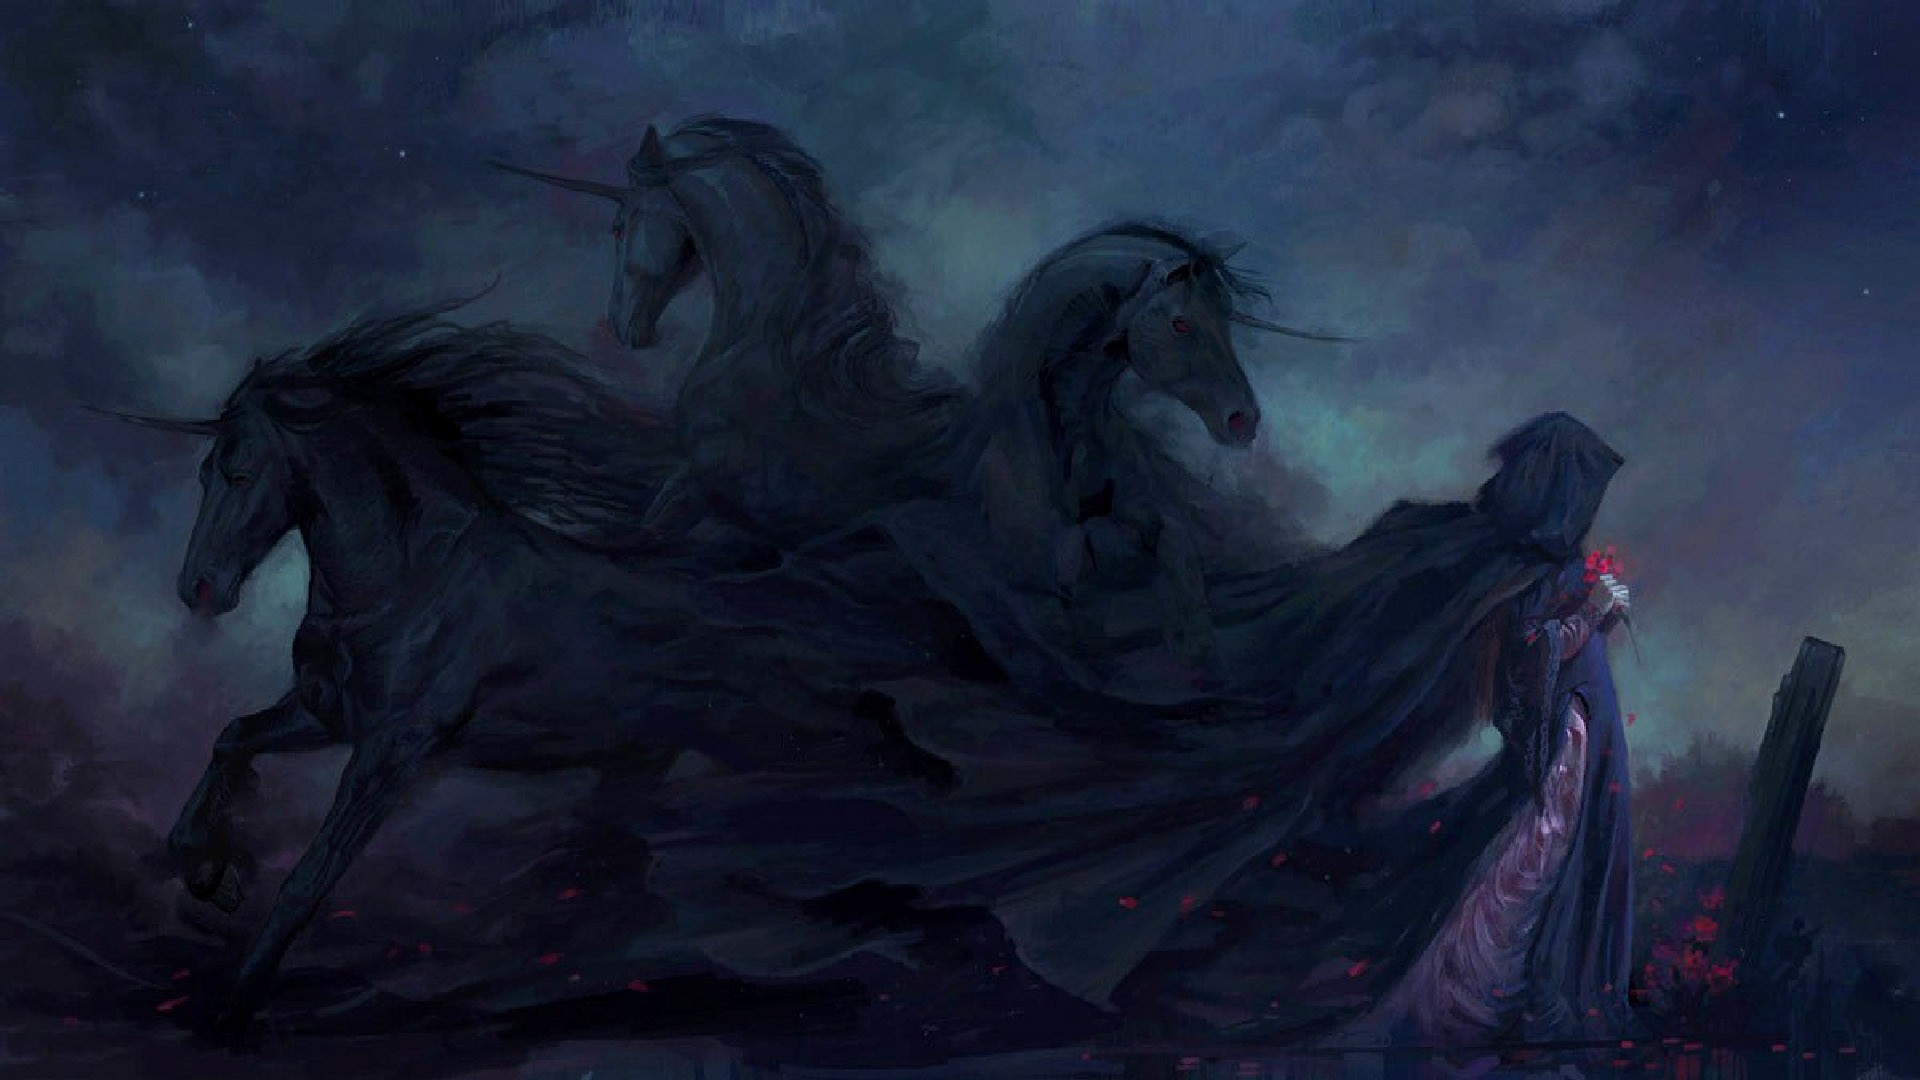 Gothic Art: Dark unicorns, Supernatural creatures, Mystic atmosphere, Fantasy style, Horses of Apocalypse. 1920x1080 Full HD Background.